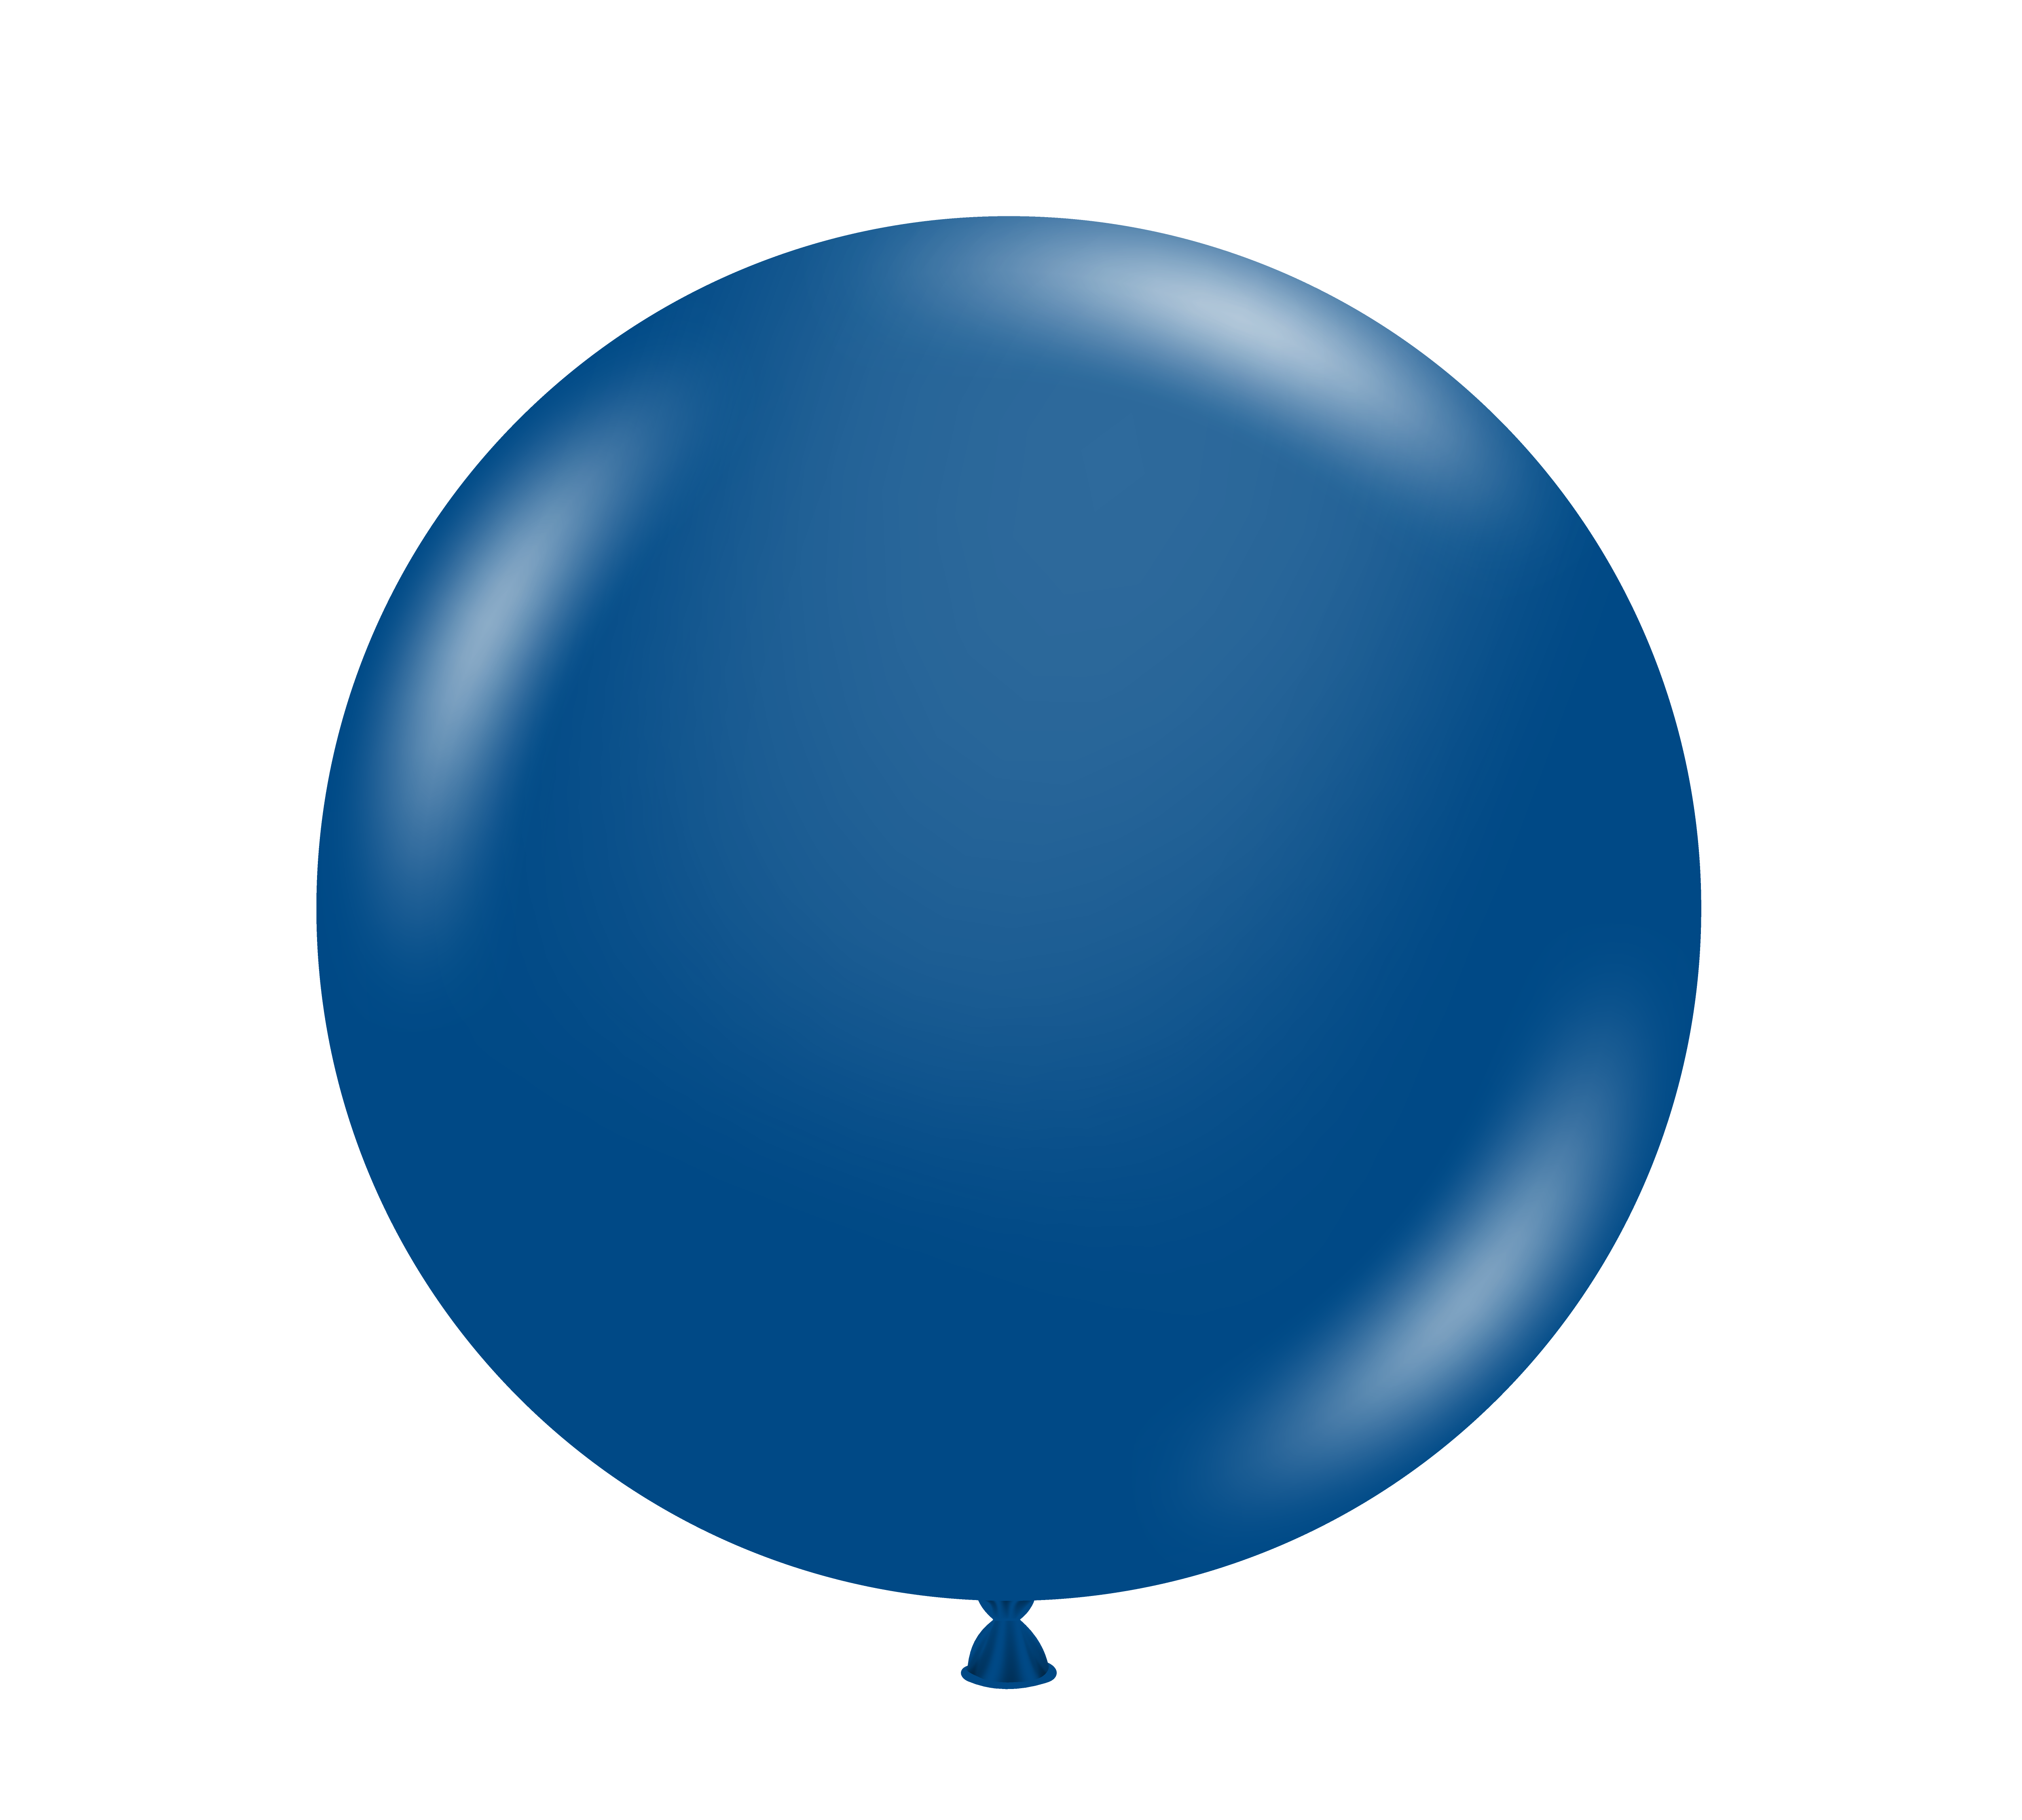 https://cdn.bargainballoons.com/products/2022-Bargain-Balloons/April-Balloons/Tuftex-Balloons-Maple-City-Rubber/Large-Balloons/TT-36018-sapphire%20blue-round-tuftex-latex-balloons.png